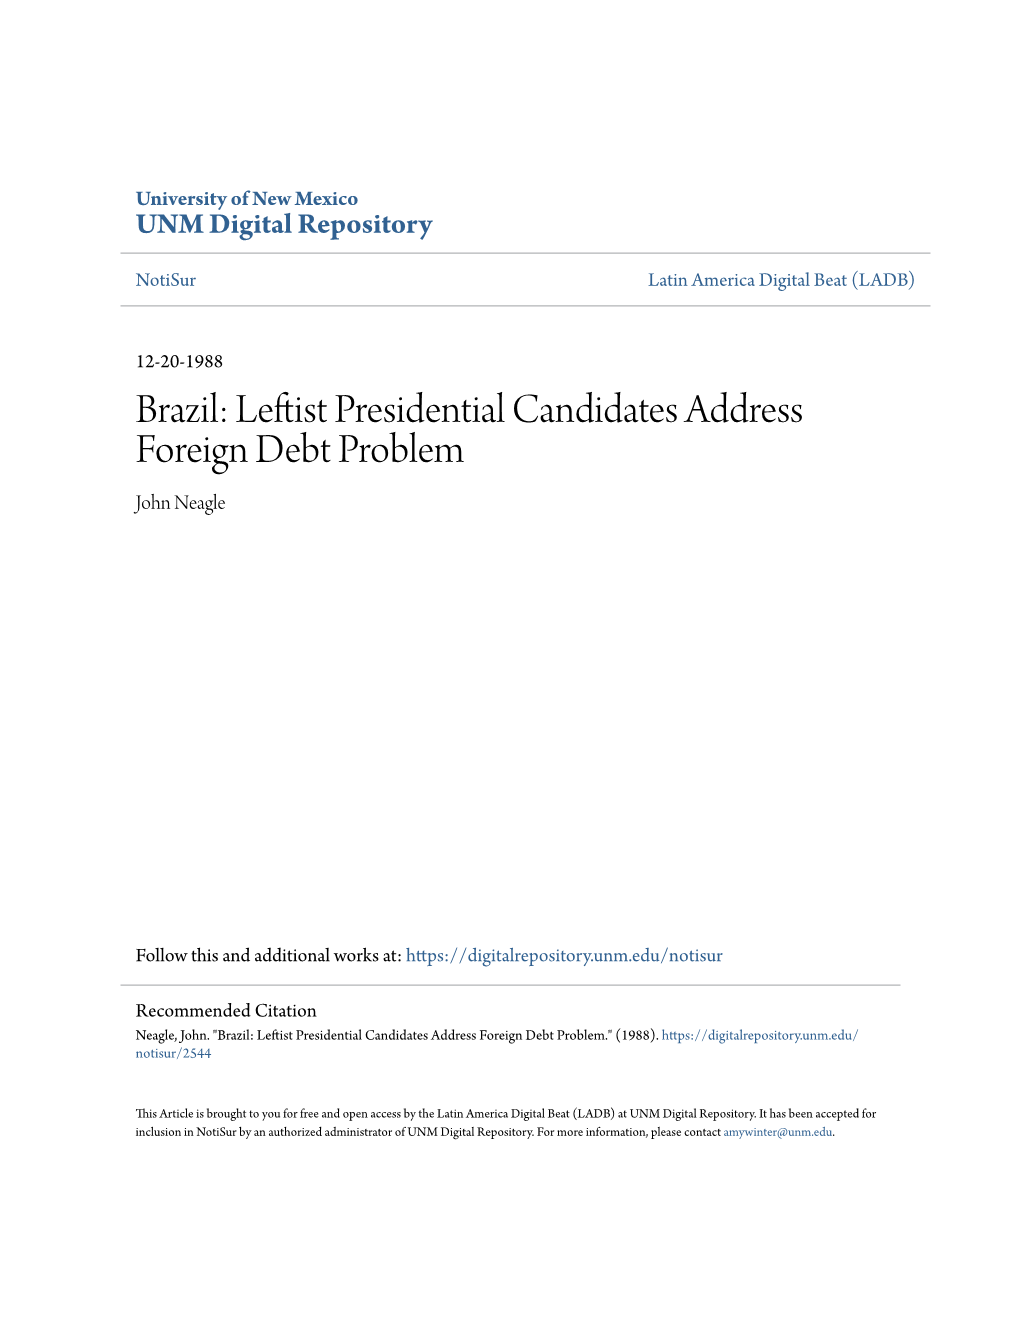 Brazil: Leftist Presidential Candidates Address Foreign Debt Problem John Neagle